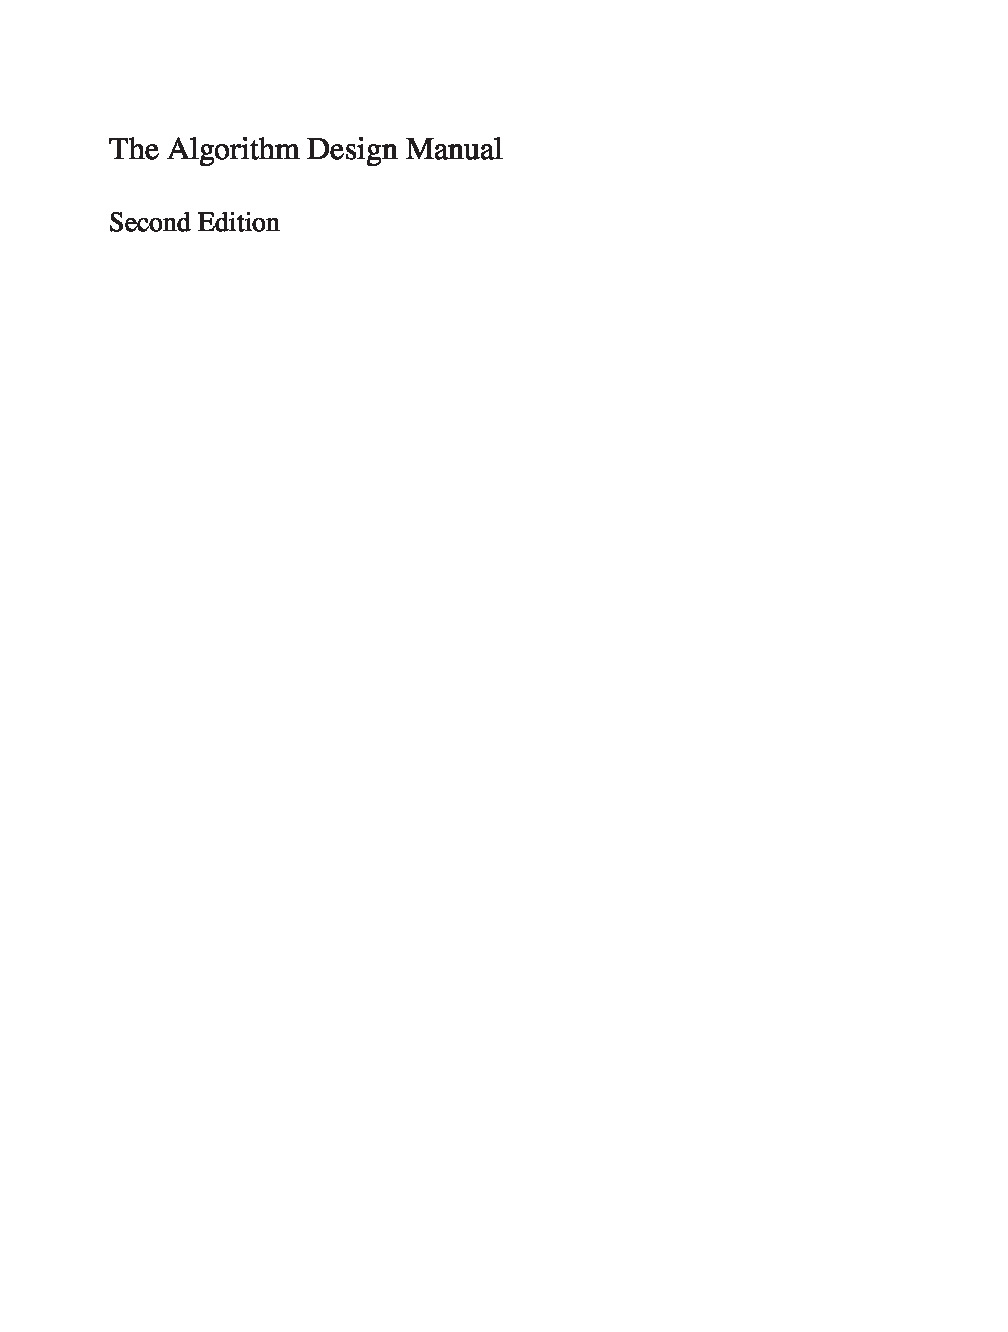 The Algorithm Design Manual – Second Edition